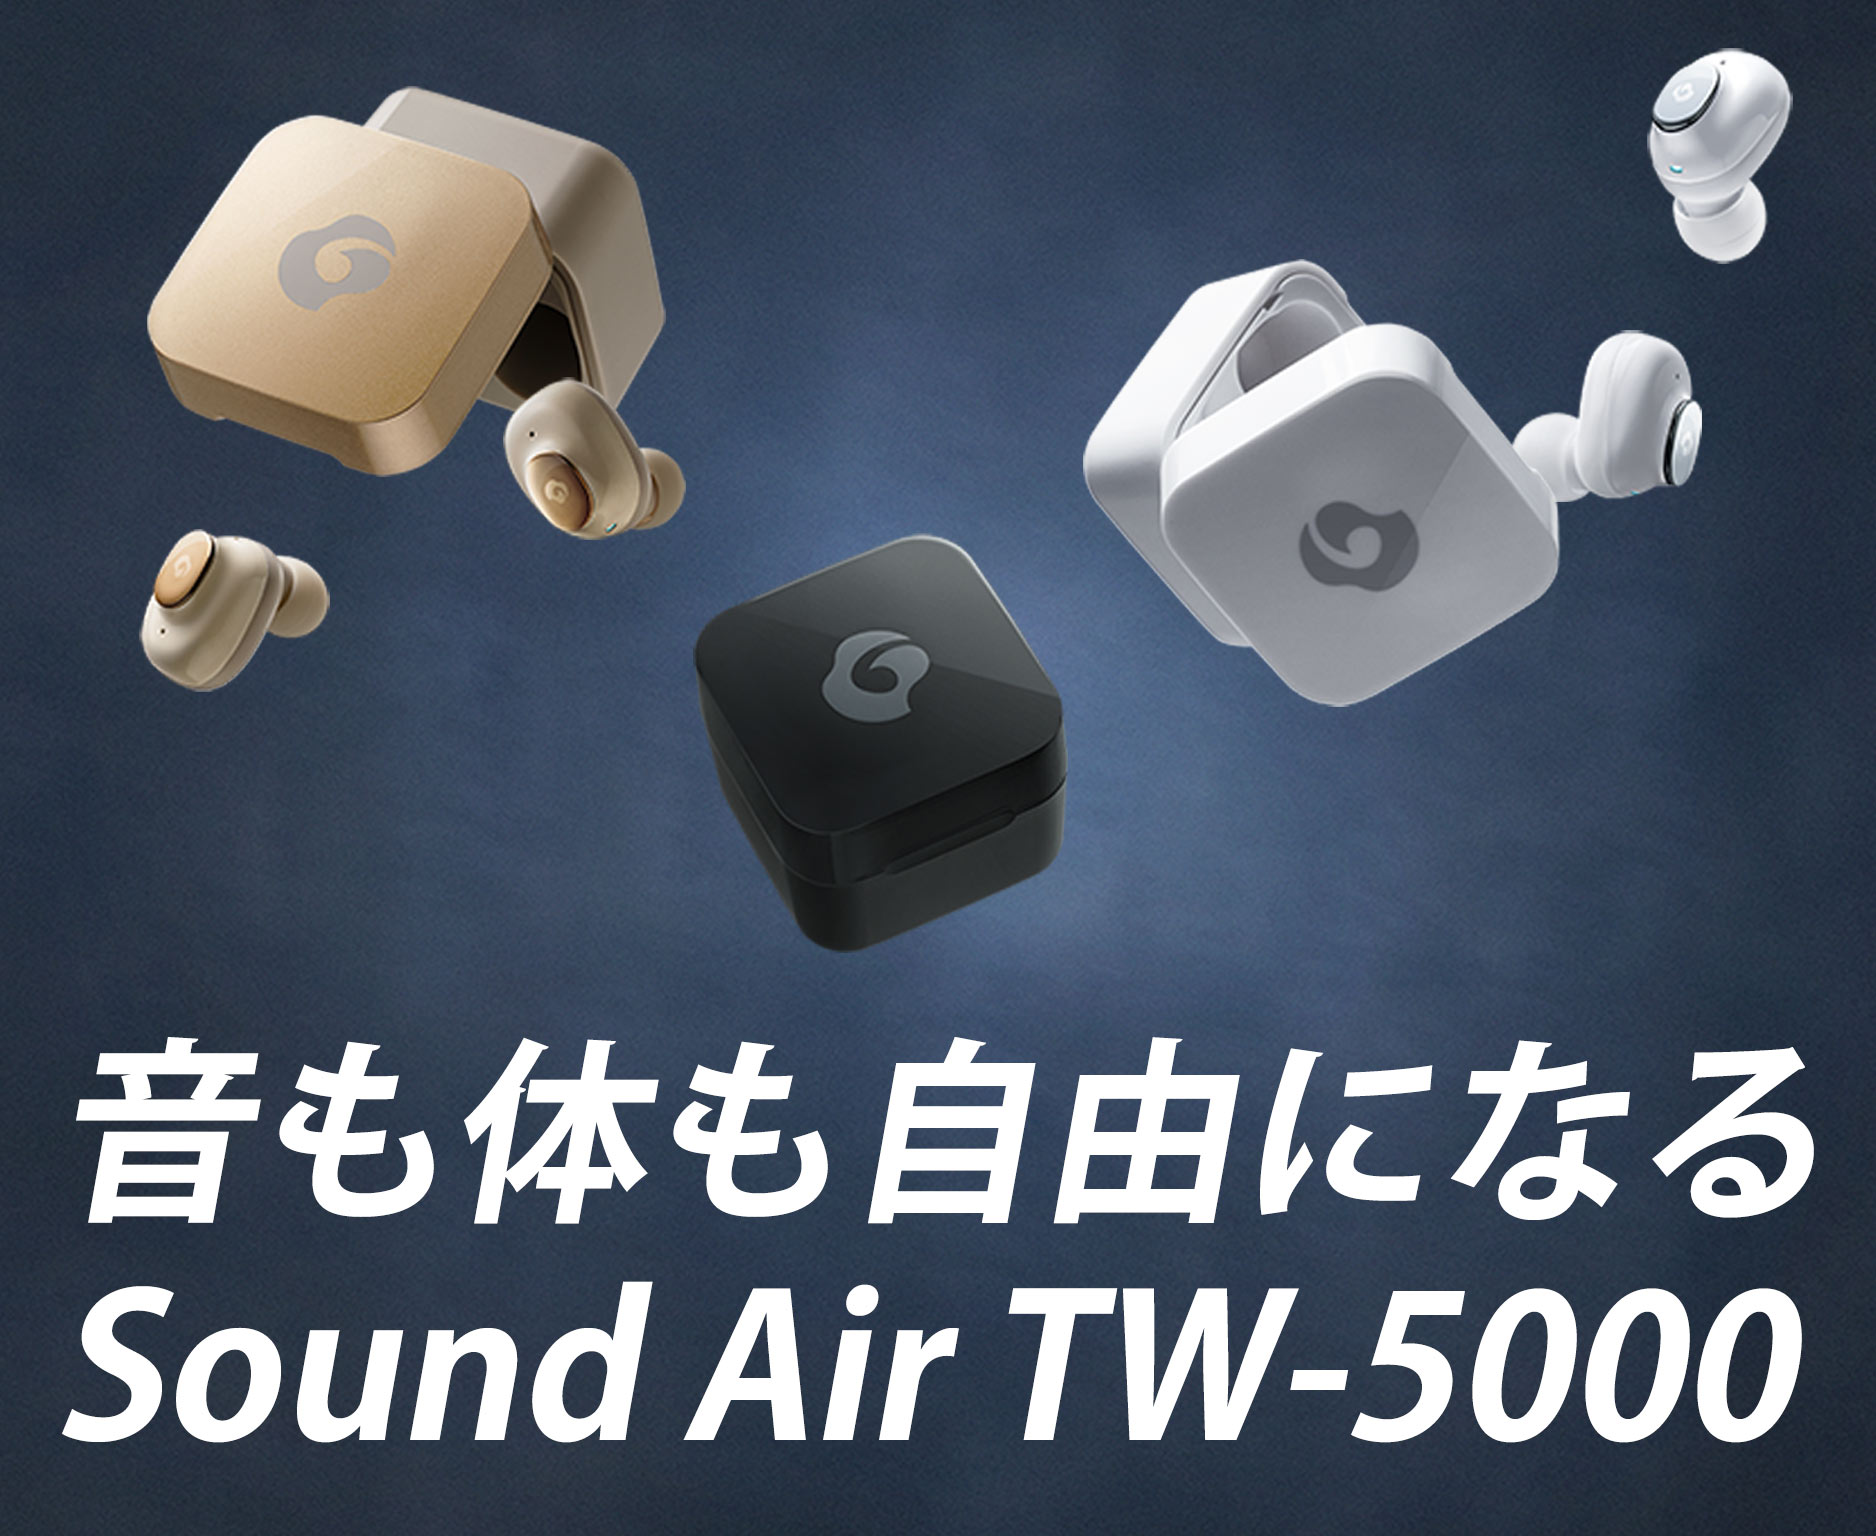 GLIDiC Sound Air TW-5000 ホワイト